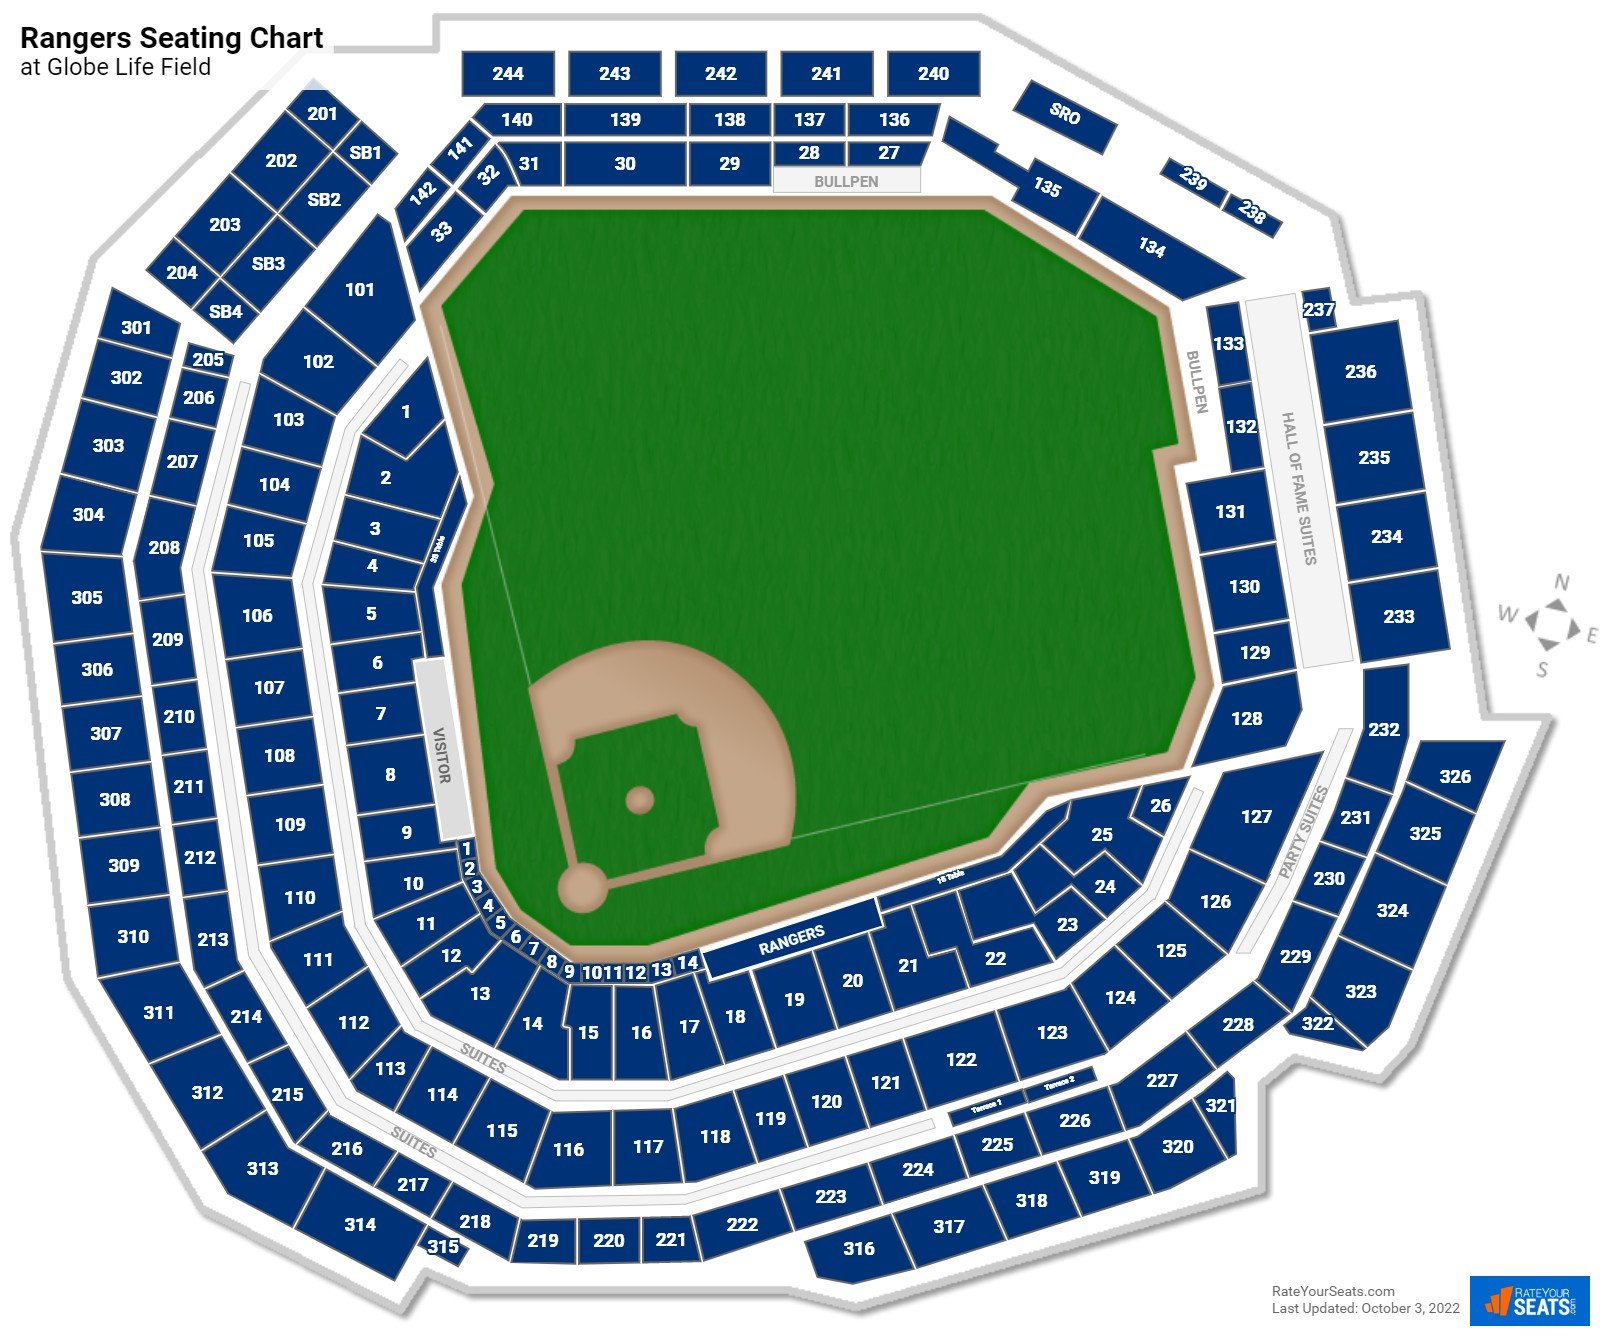 Texas Rangers Seating Chart at Globe Life Field